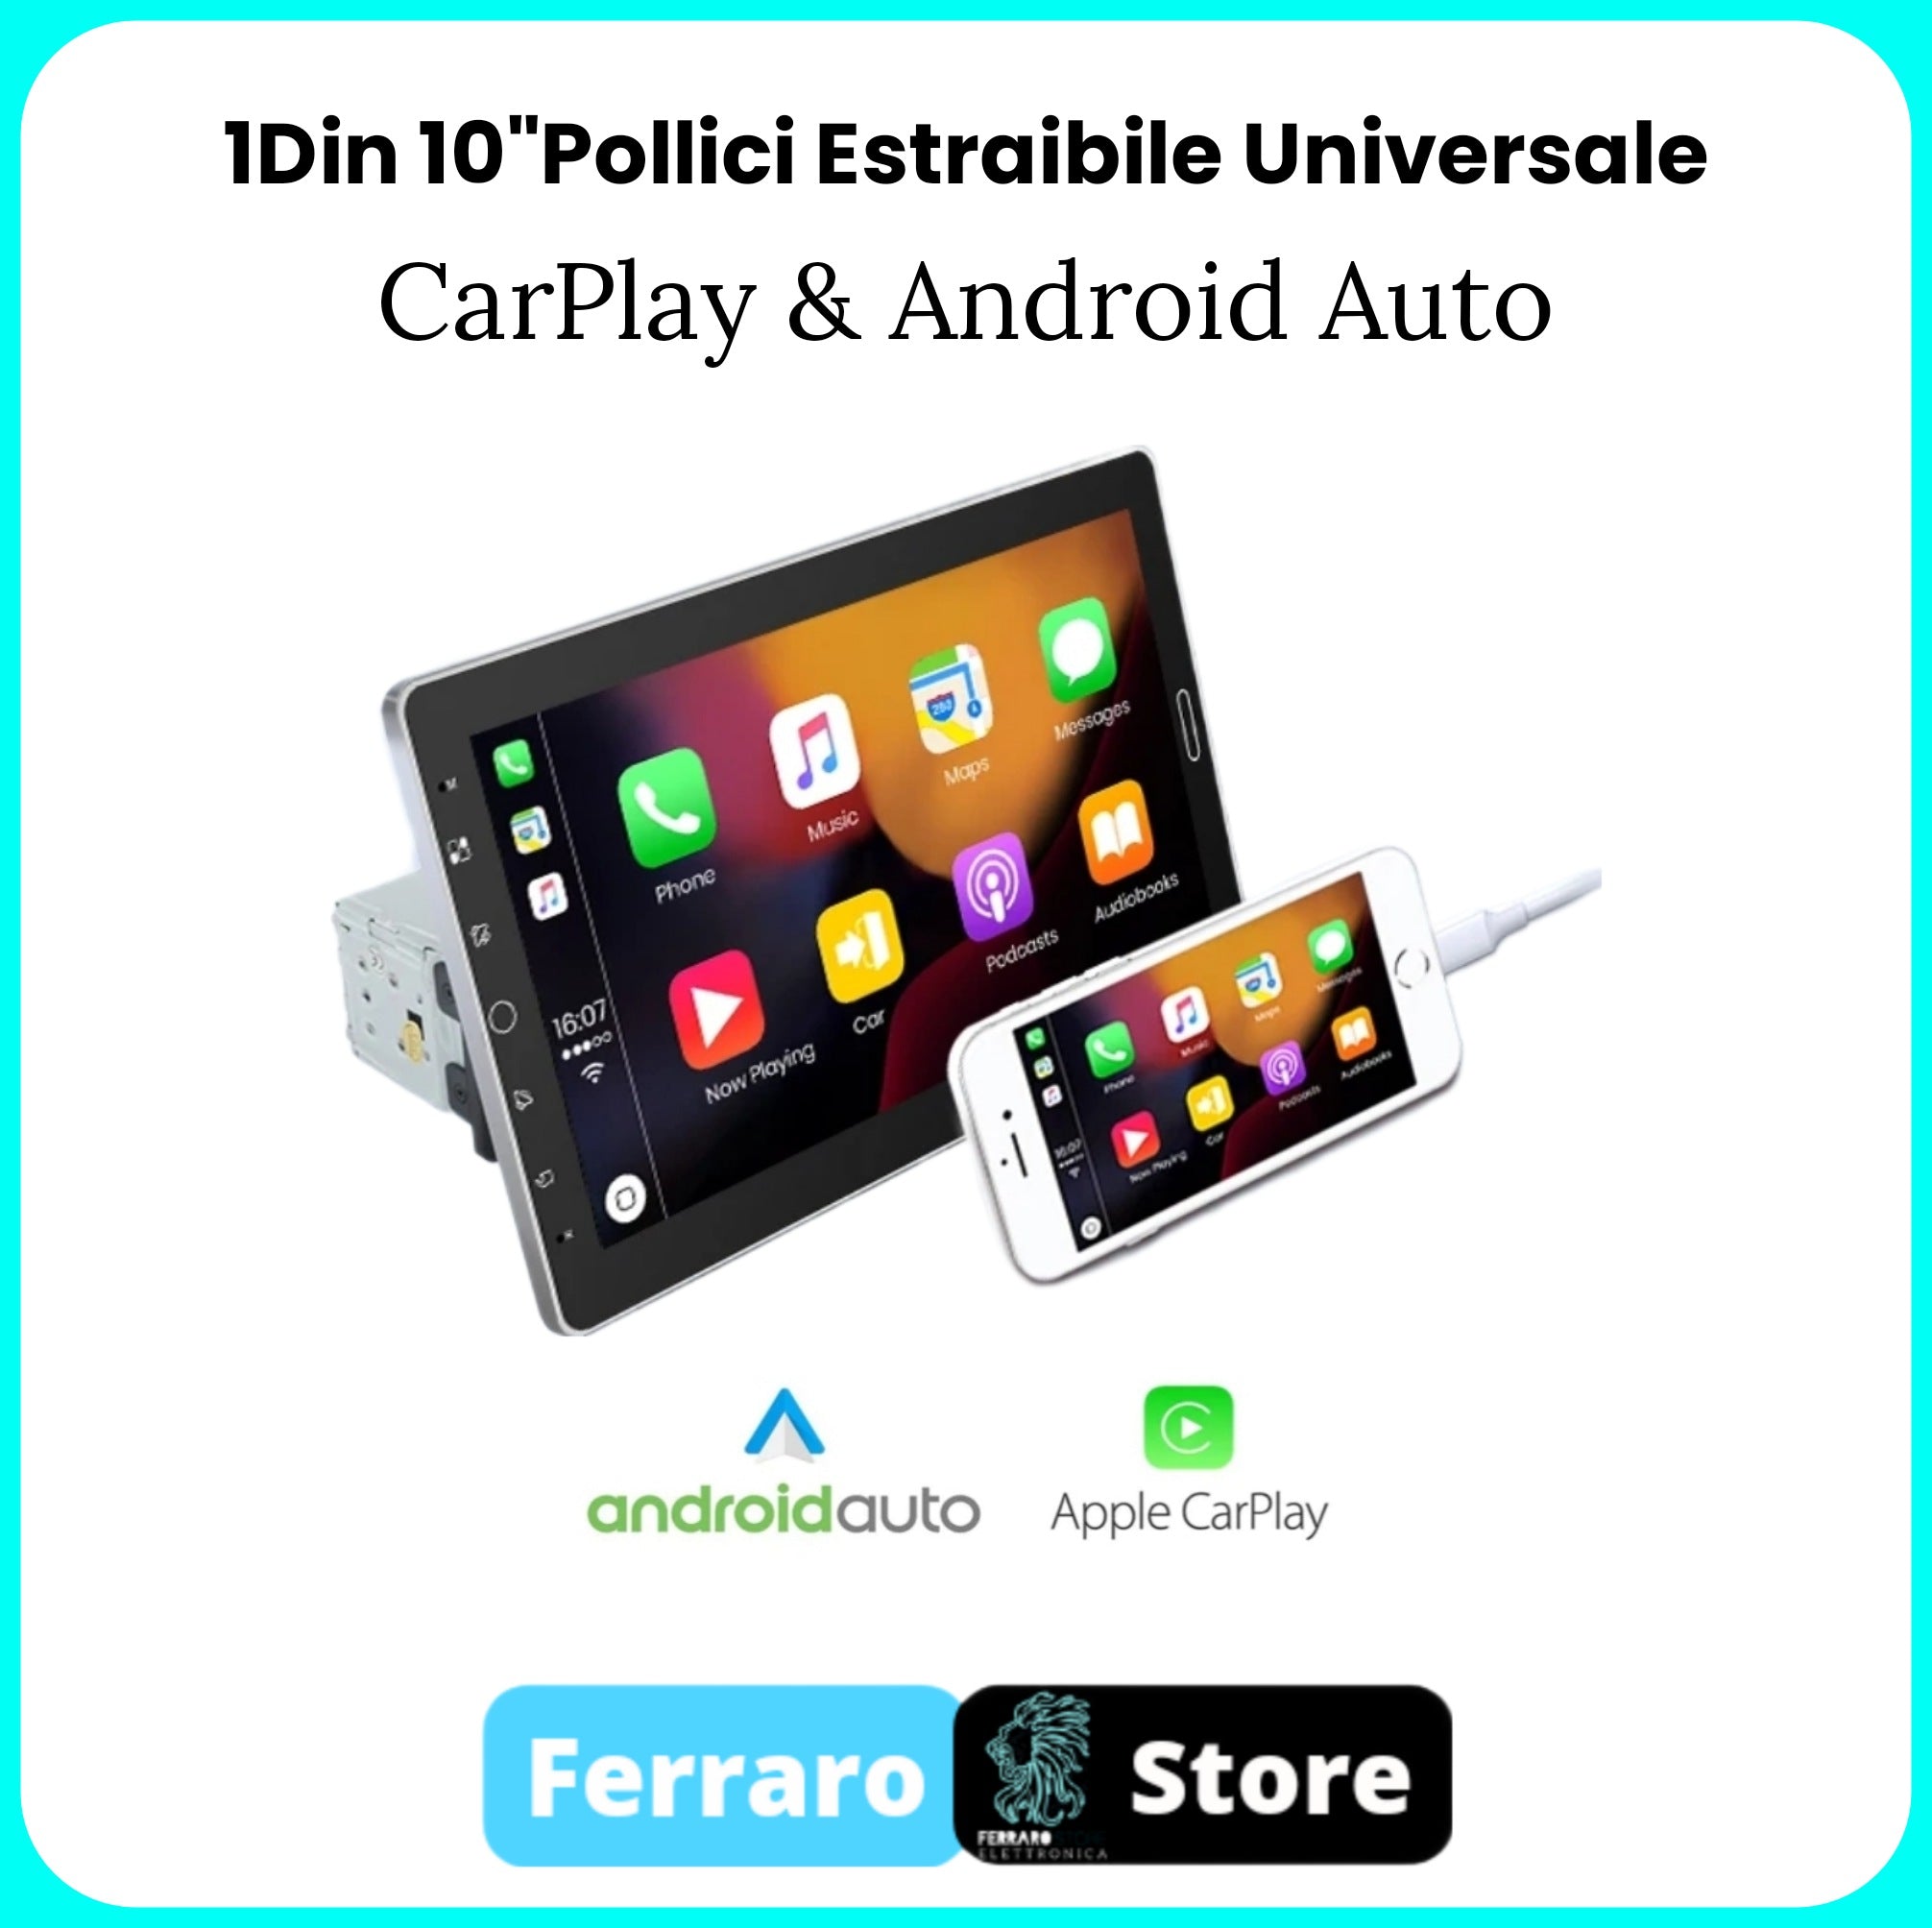 Autoradio Universale [ESTRAIBILE] - 1Din 10" Pollici, Bluetooth, Radio, Mirror Link Android e IOS, CarPlay & Android Auto